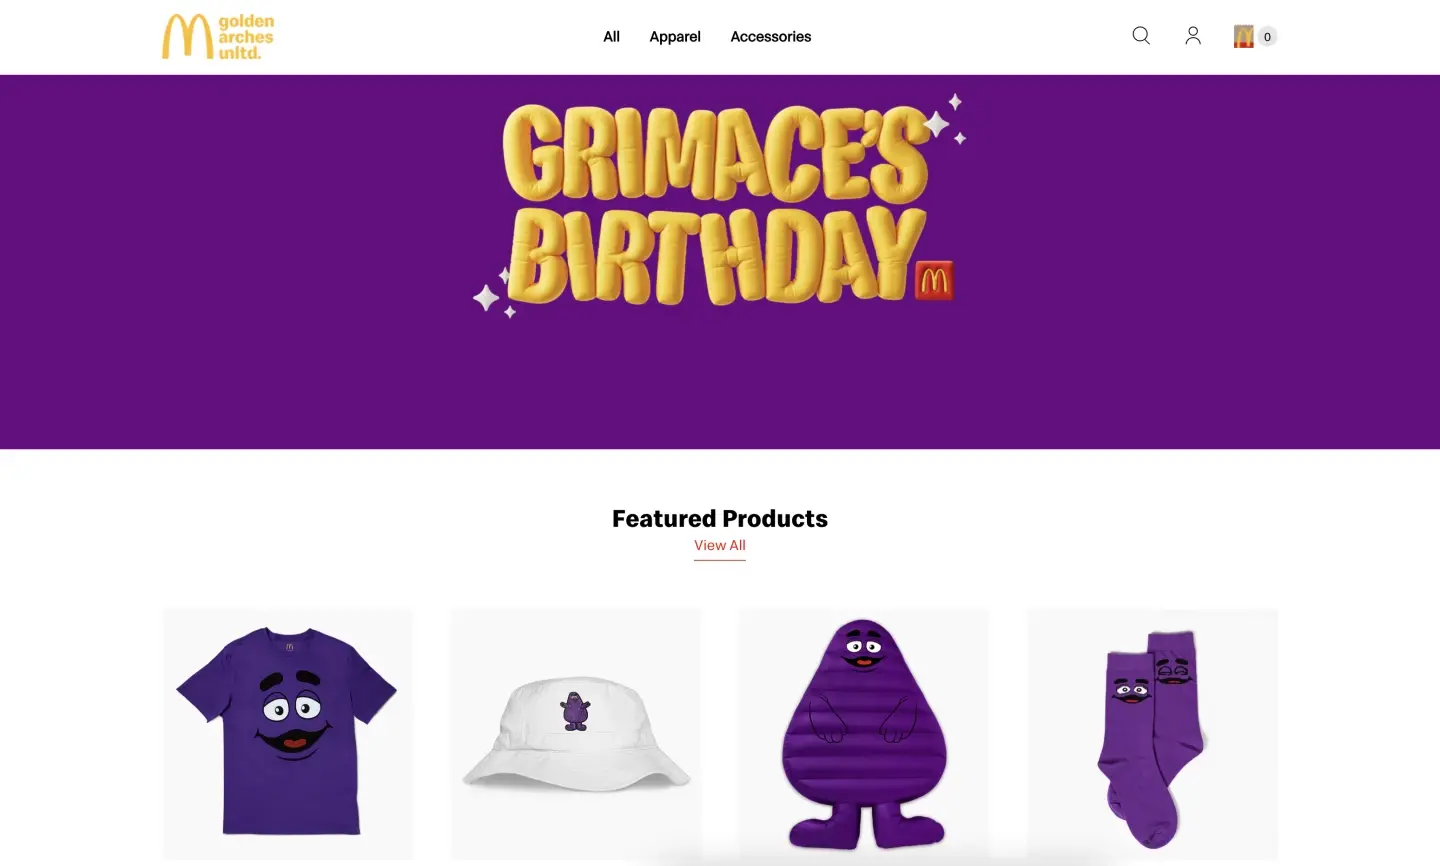 Grimace's birthday on GoldenArchesUnlimited.com